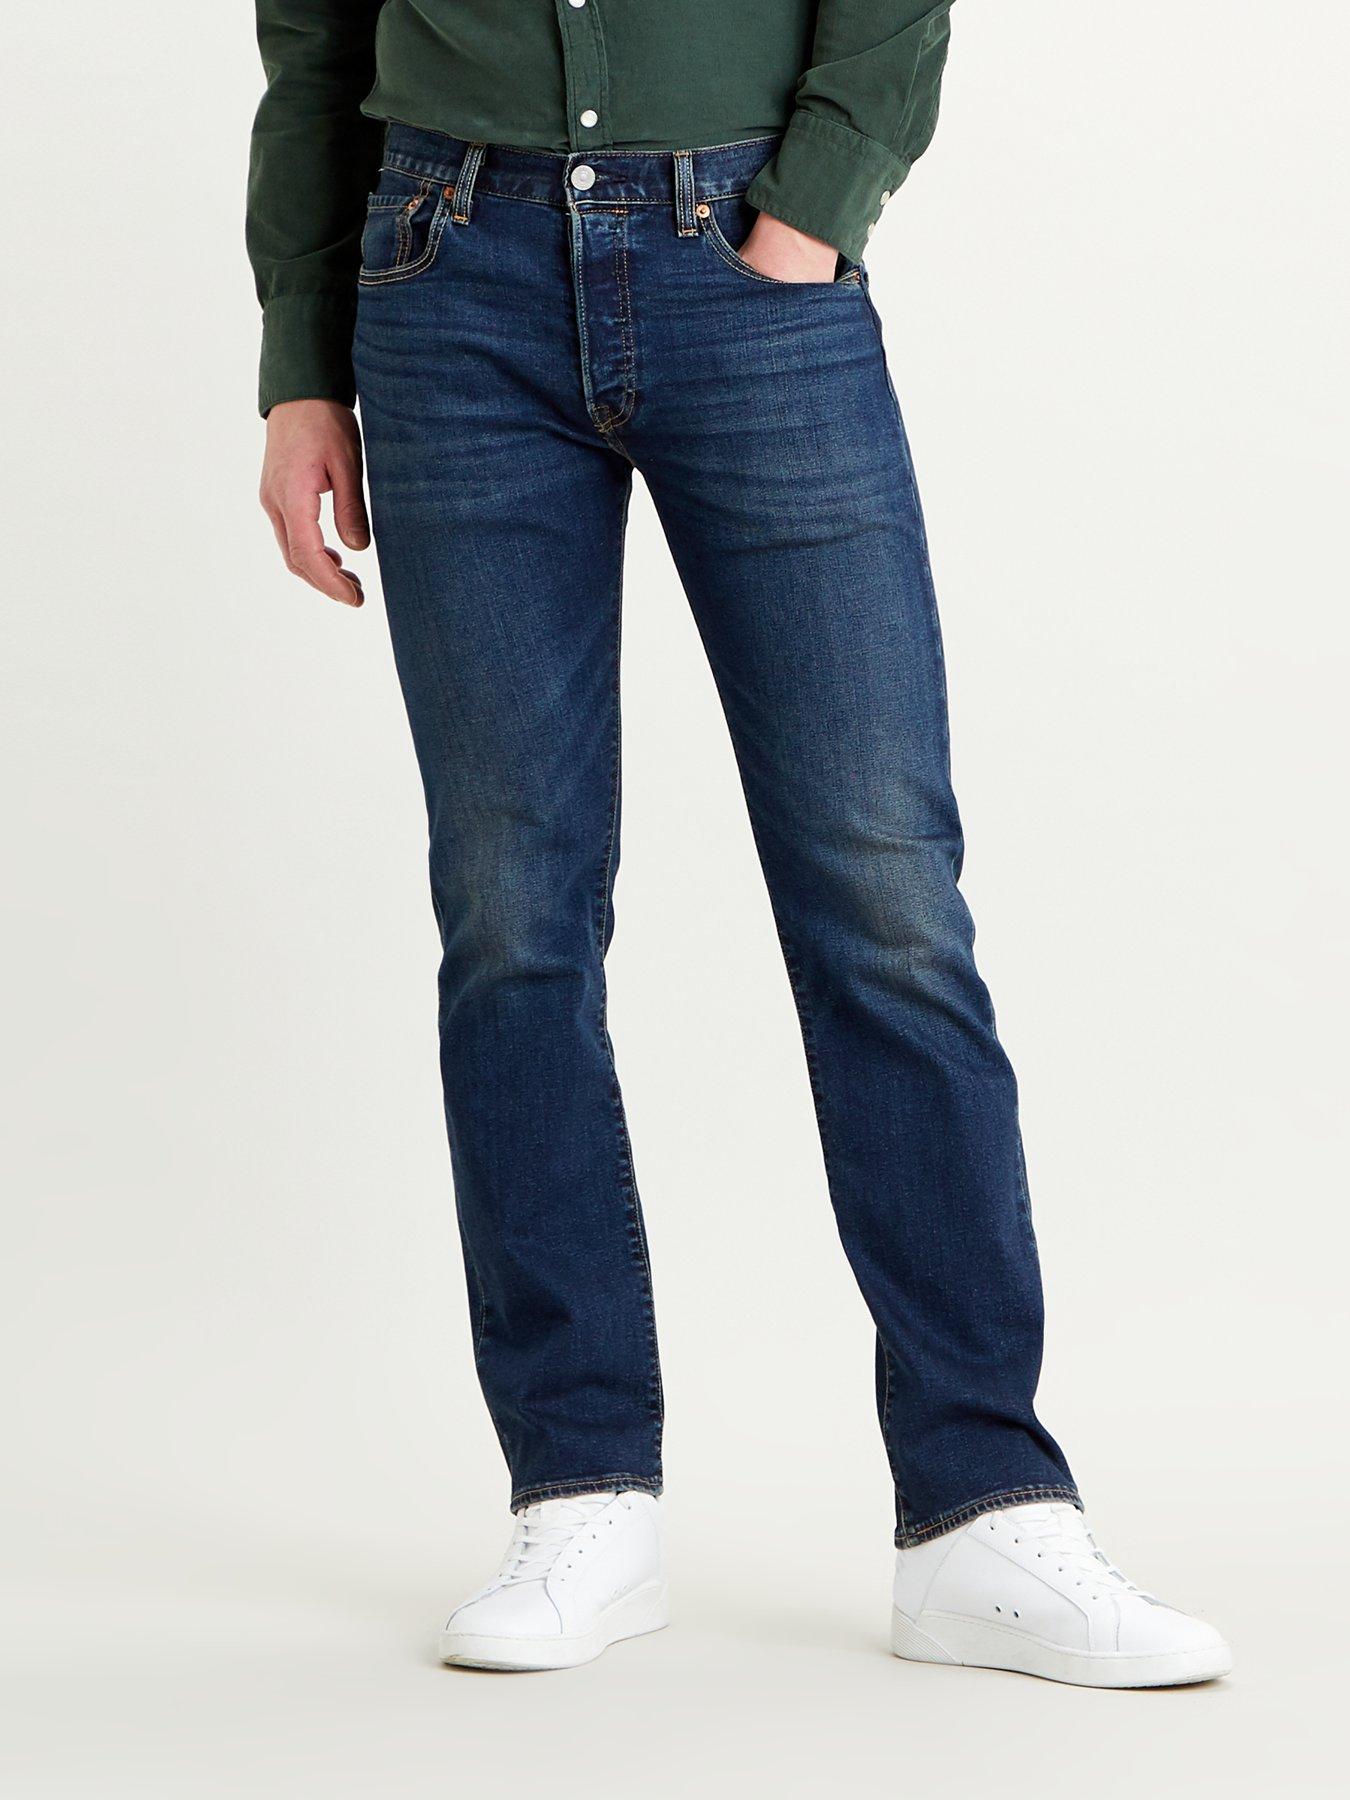 levi's dark indigo jeans